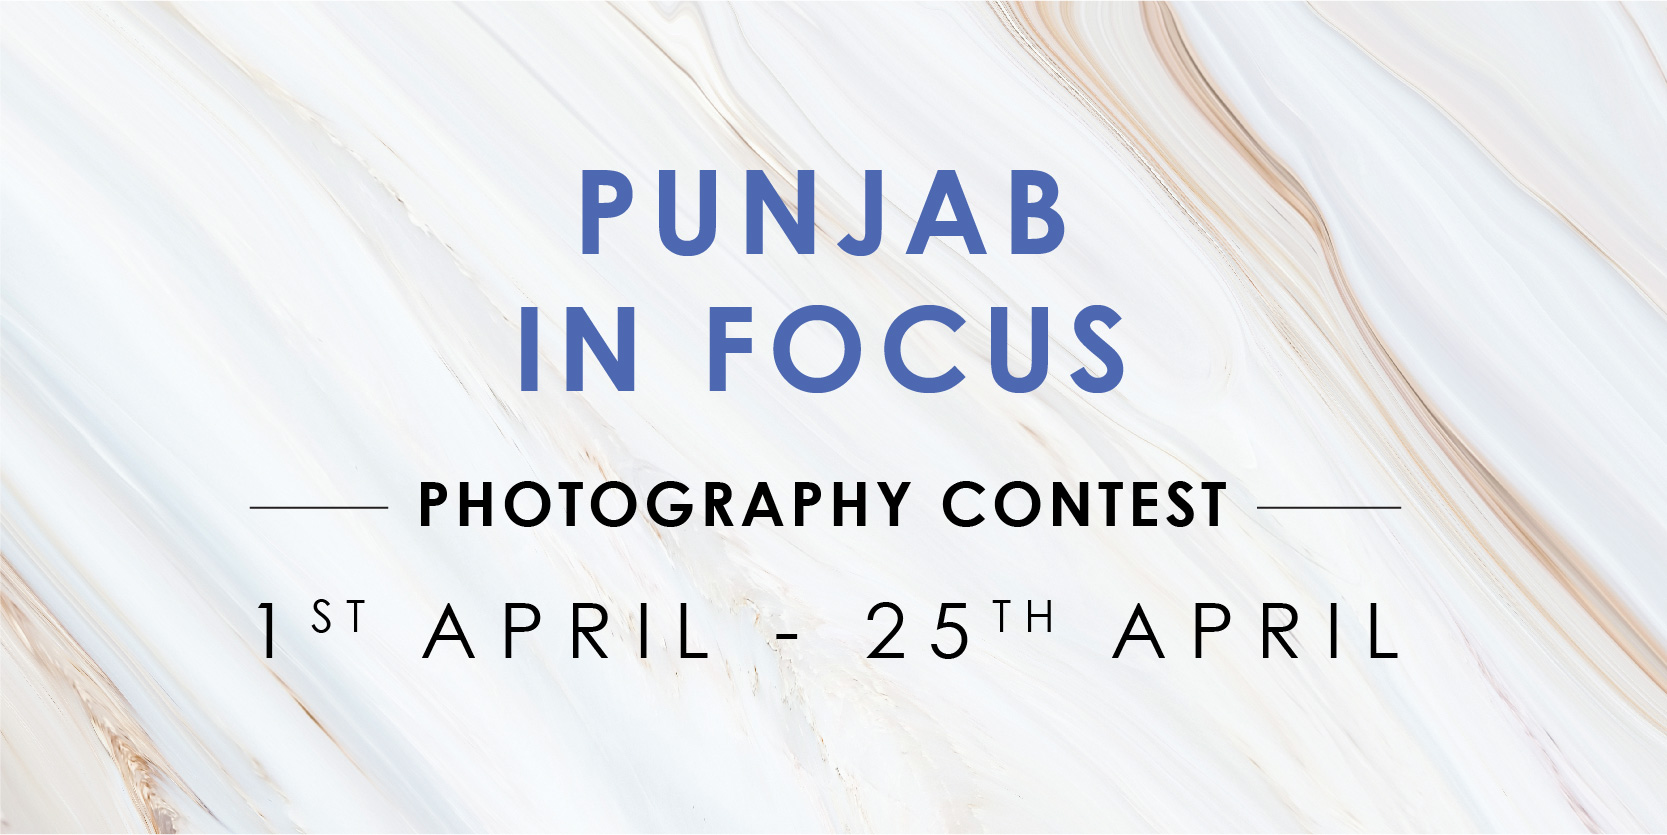 PAI 2019: Punjab In Focus - Photography Contest